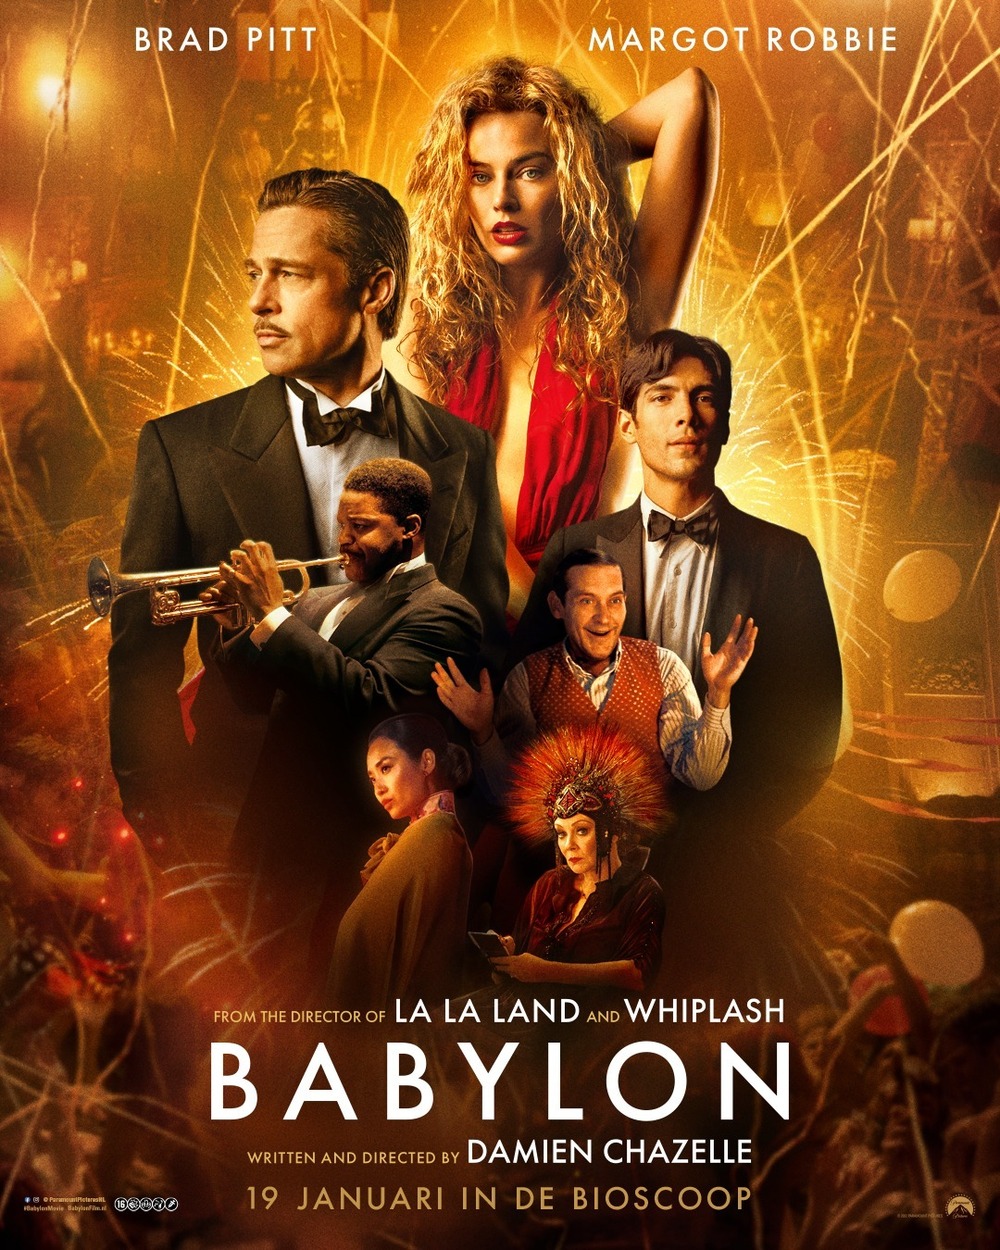 movie review on babylon